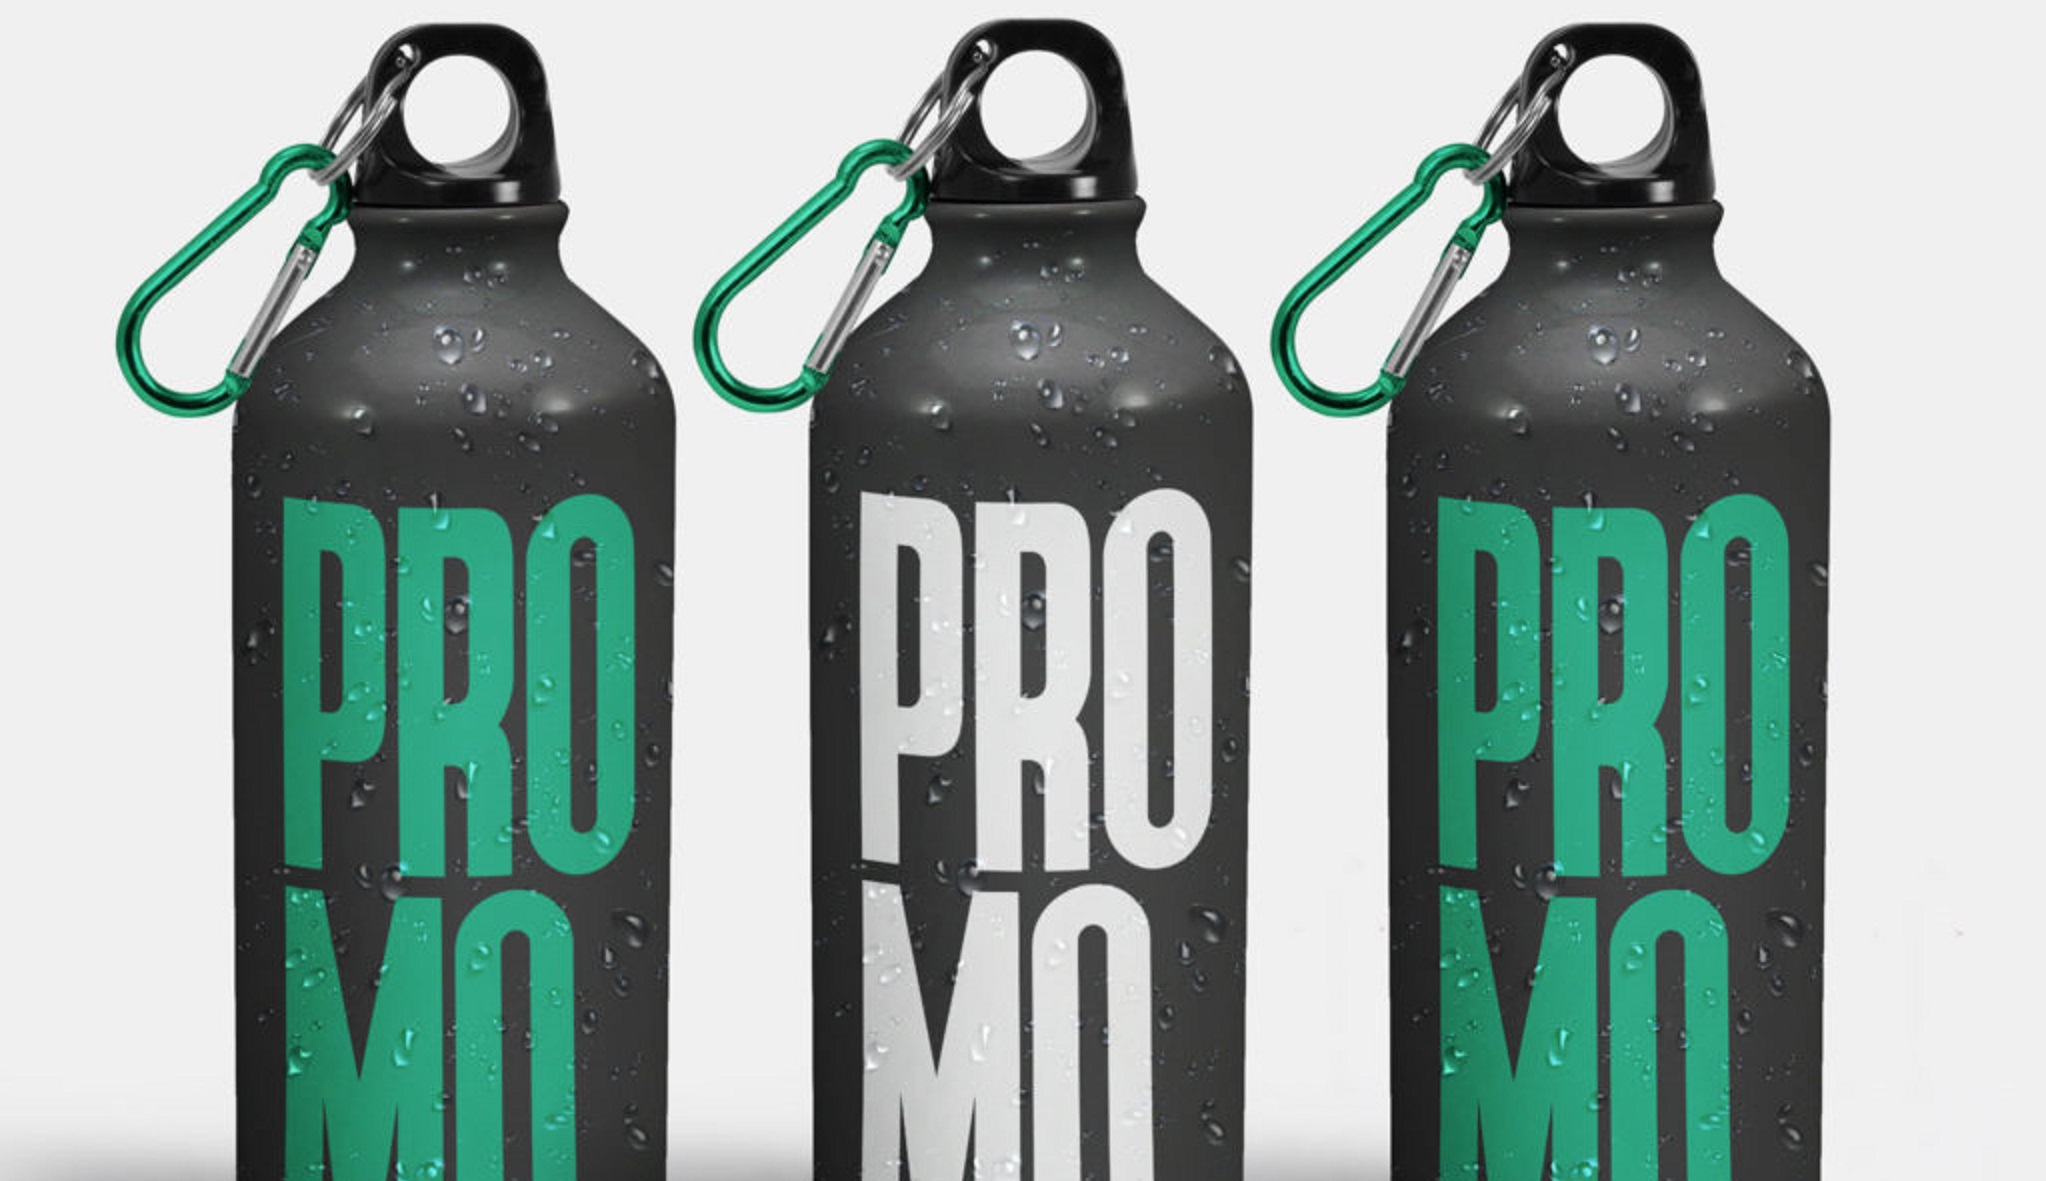 Promotional water bottles